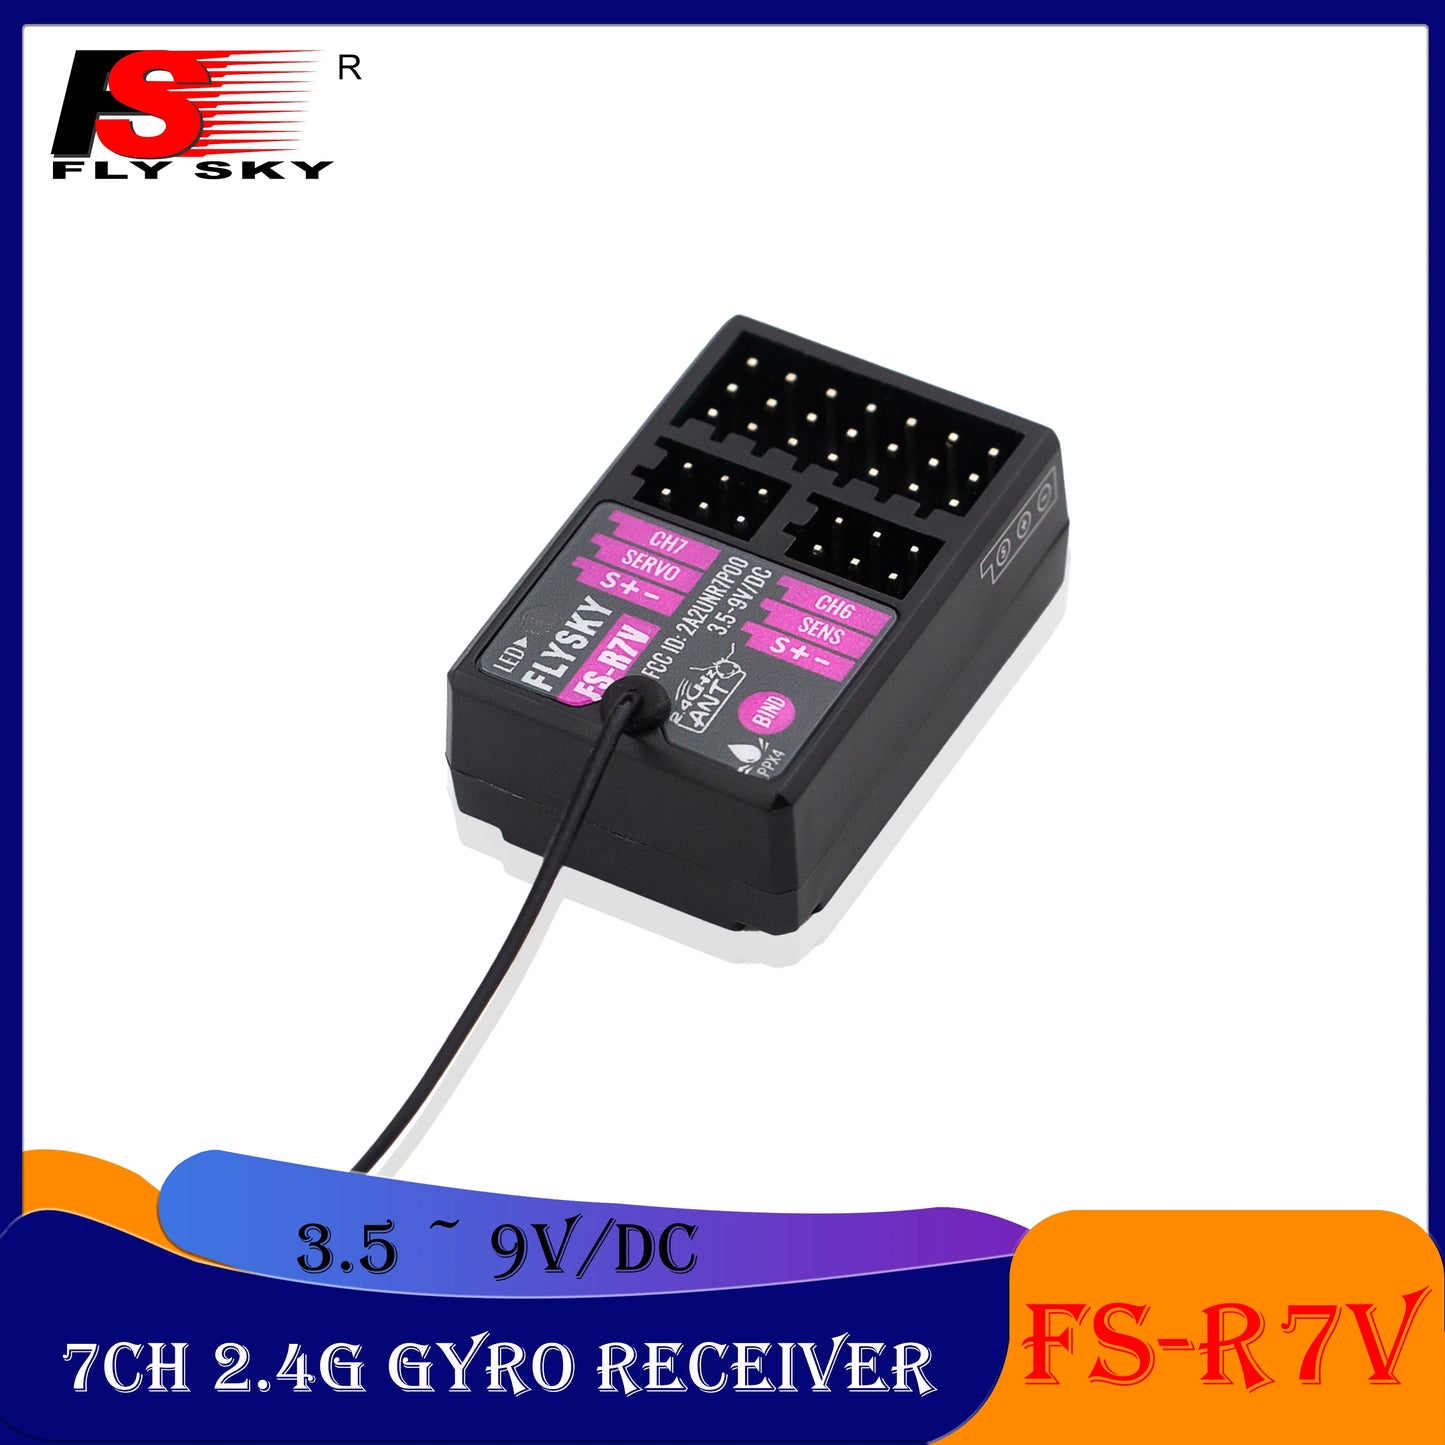 FLYSKY FS-R7V 7CH 2.4G Gyro Receiver - 3.5 ~ 9V/DC ANT Single Antenna PWM for RC Model Cars Boats Transmitter FS-G7P Accessories